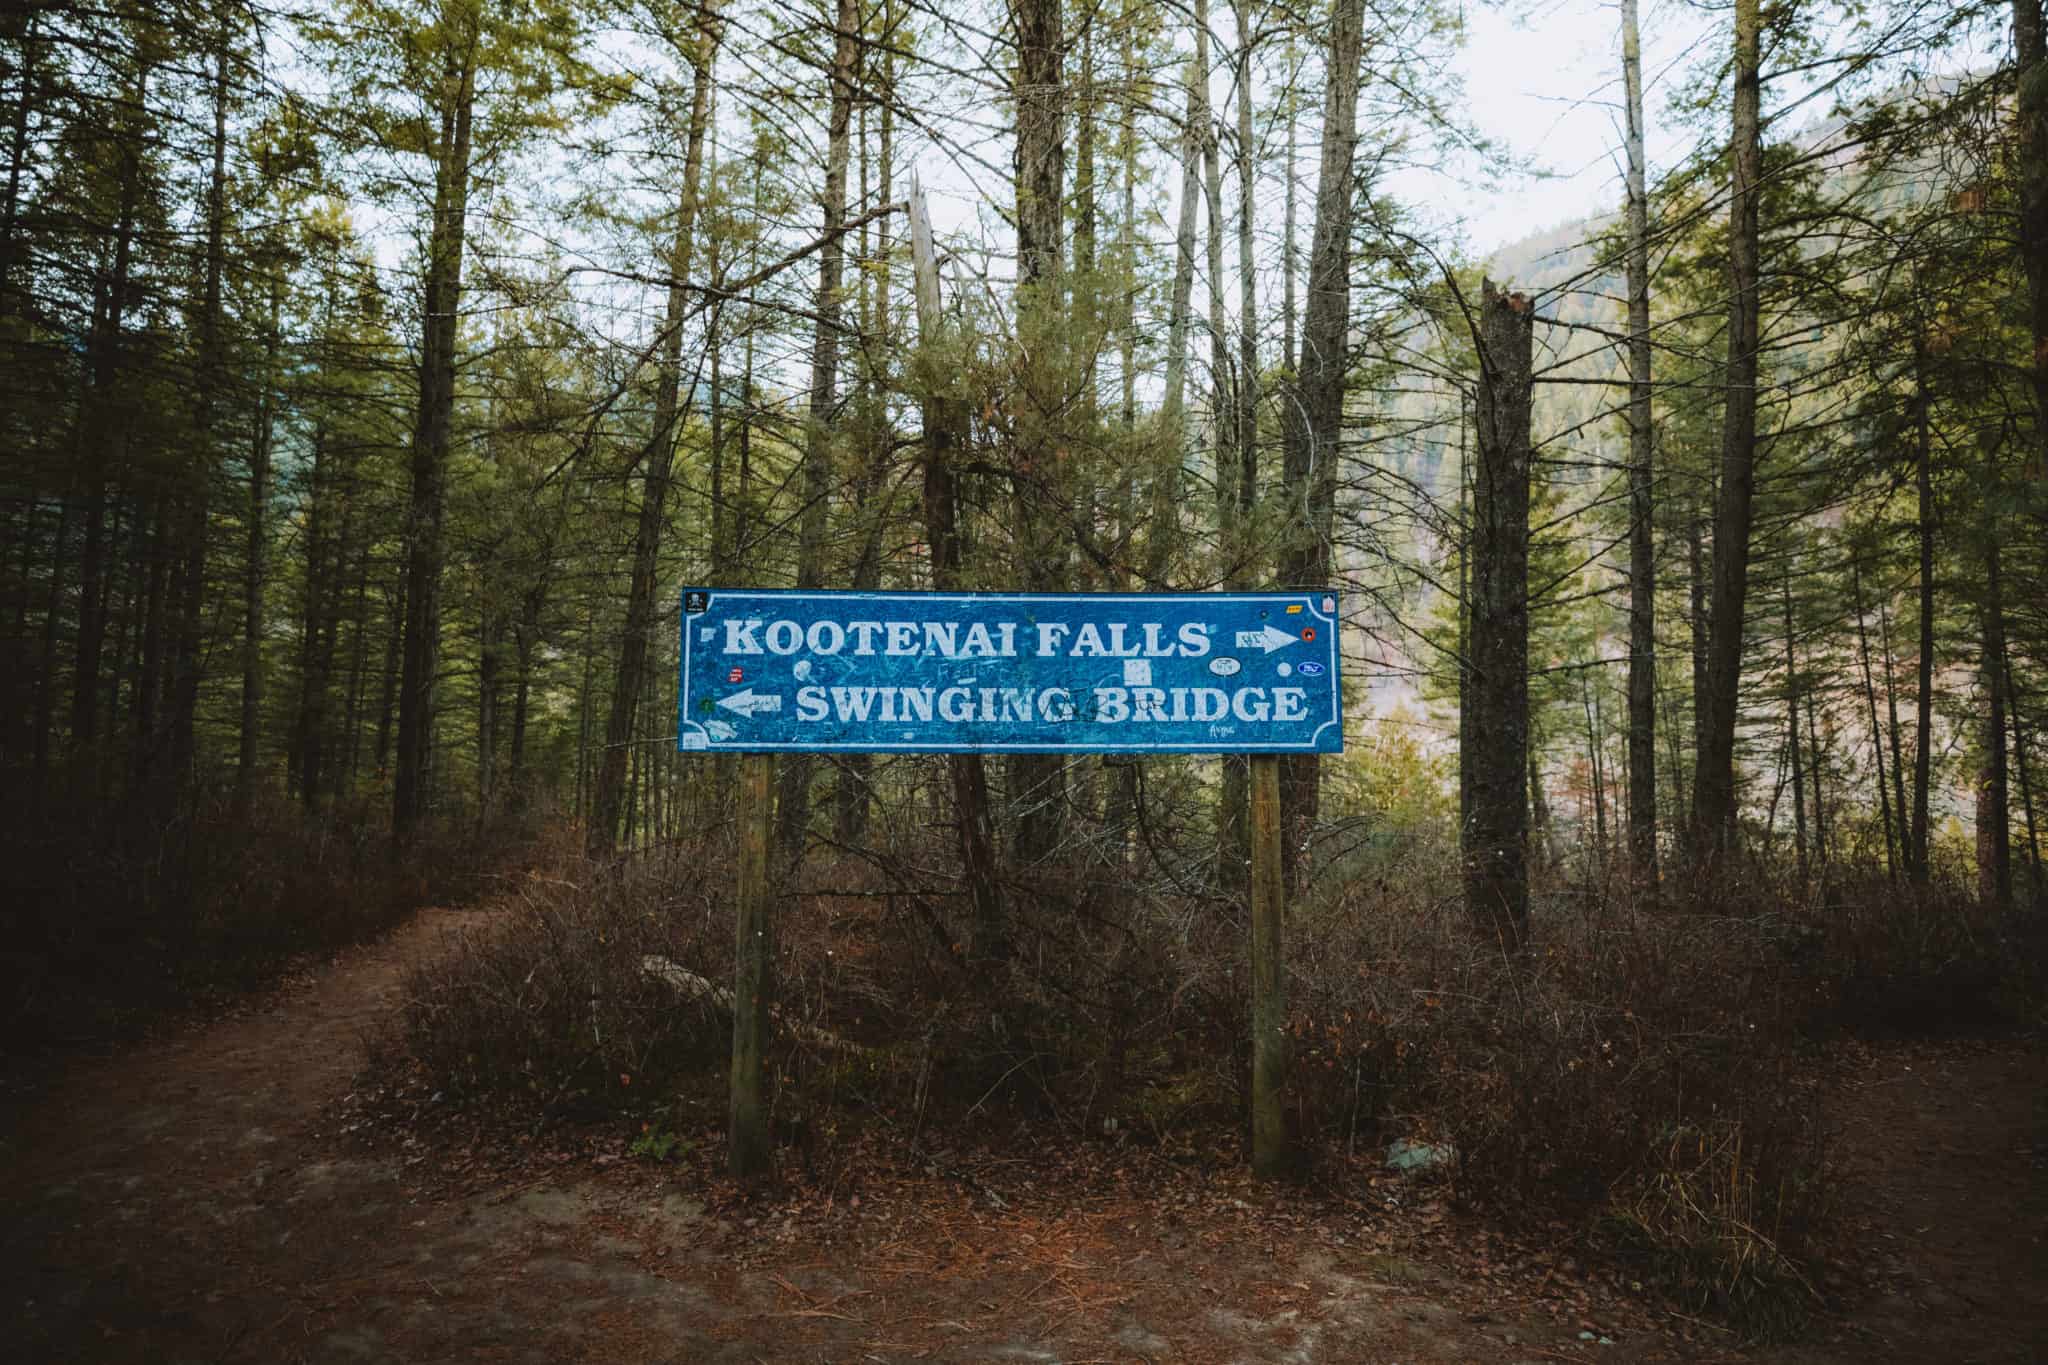 Big blue sign kootenai falls swinging bridge / kootenai falls directions